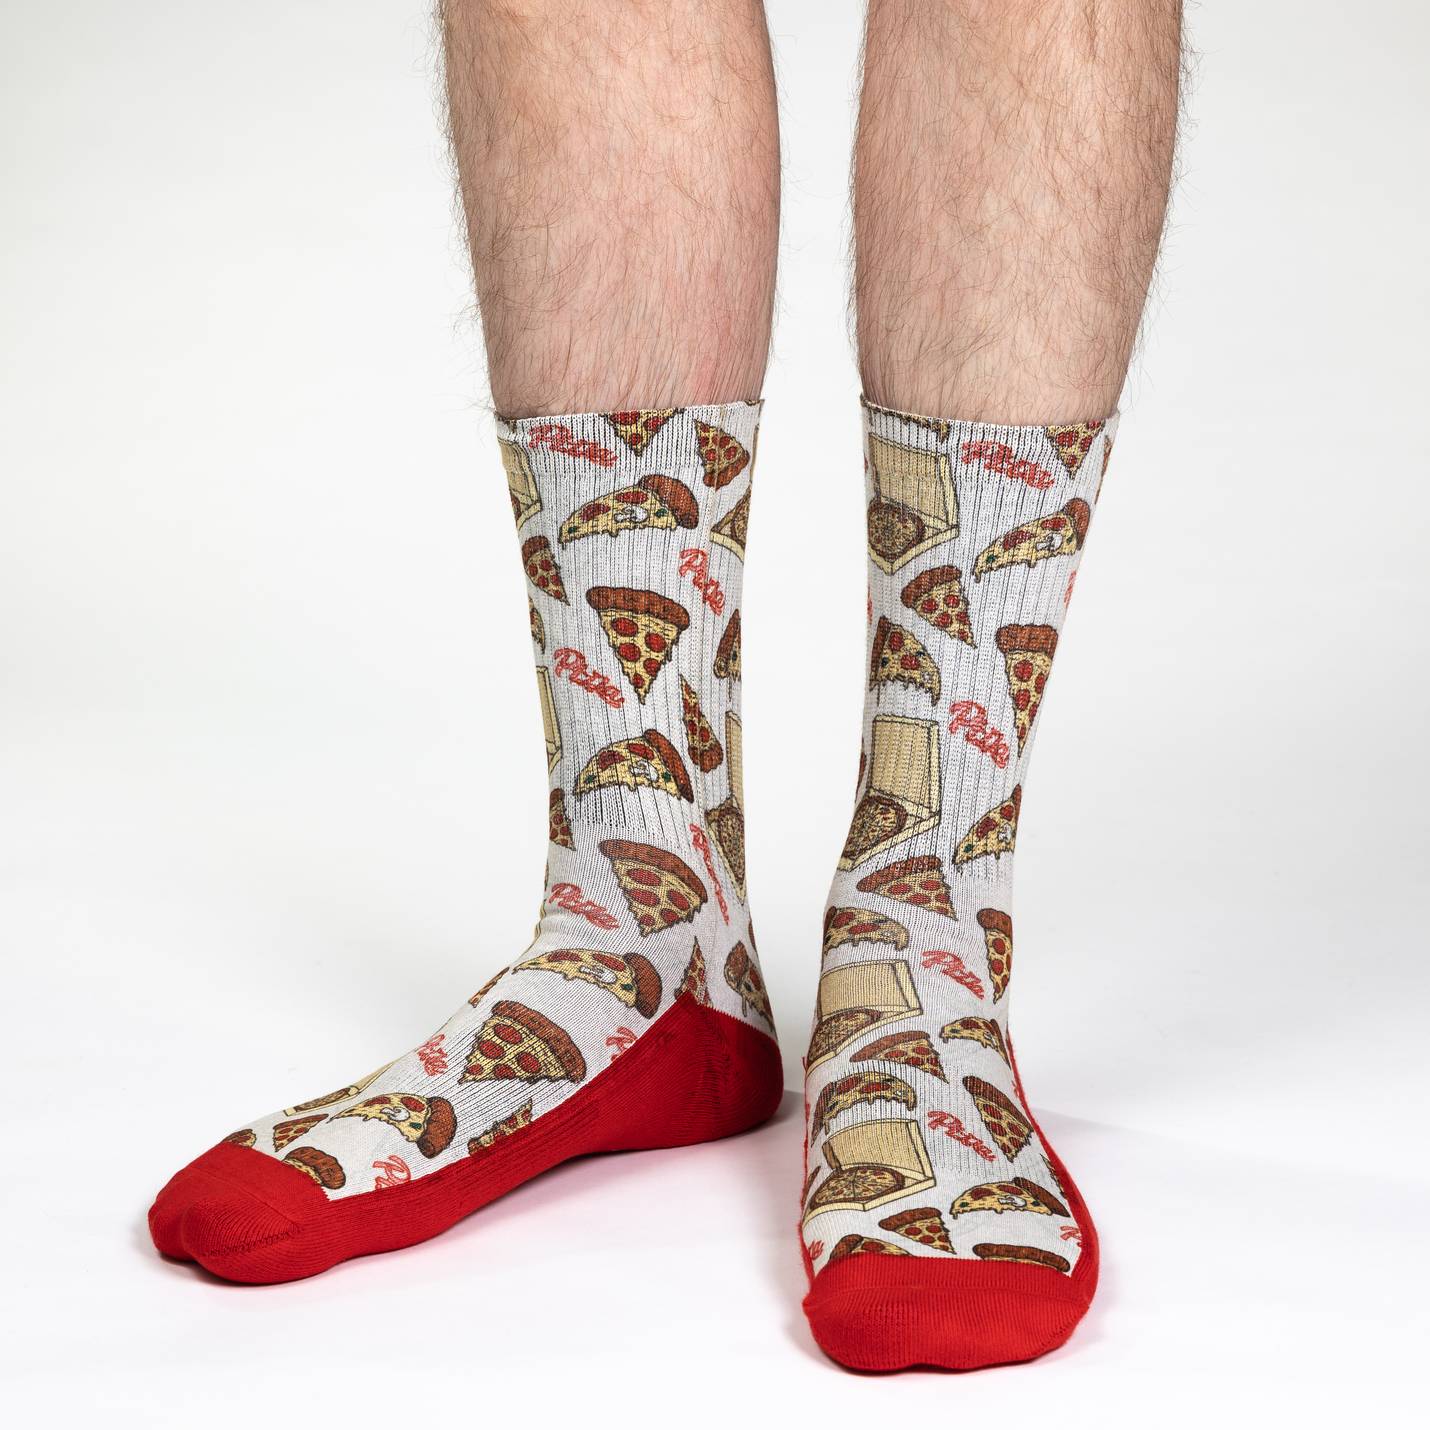 Men's Pizza Underwear – Good Luck Sock